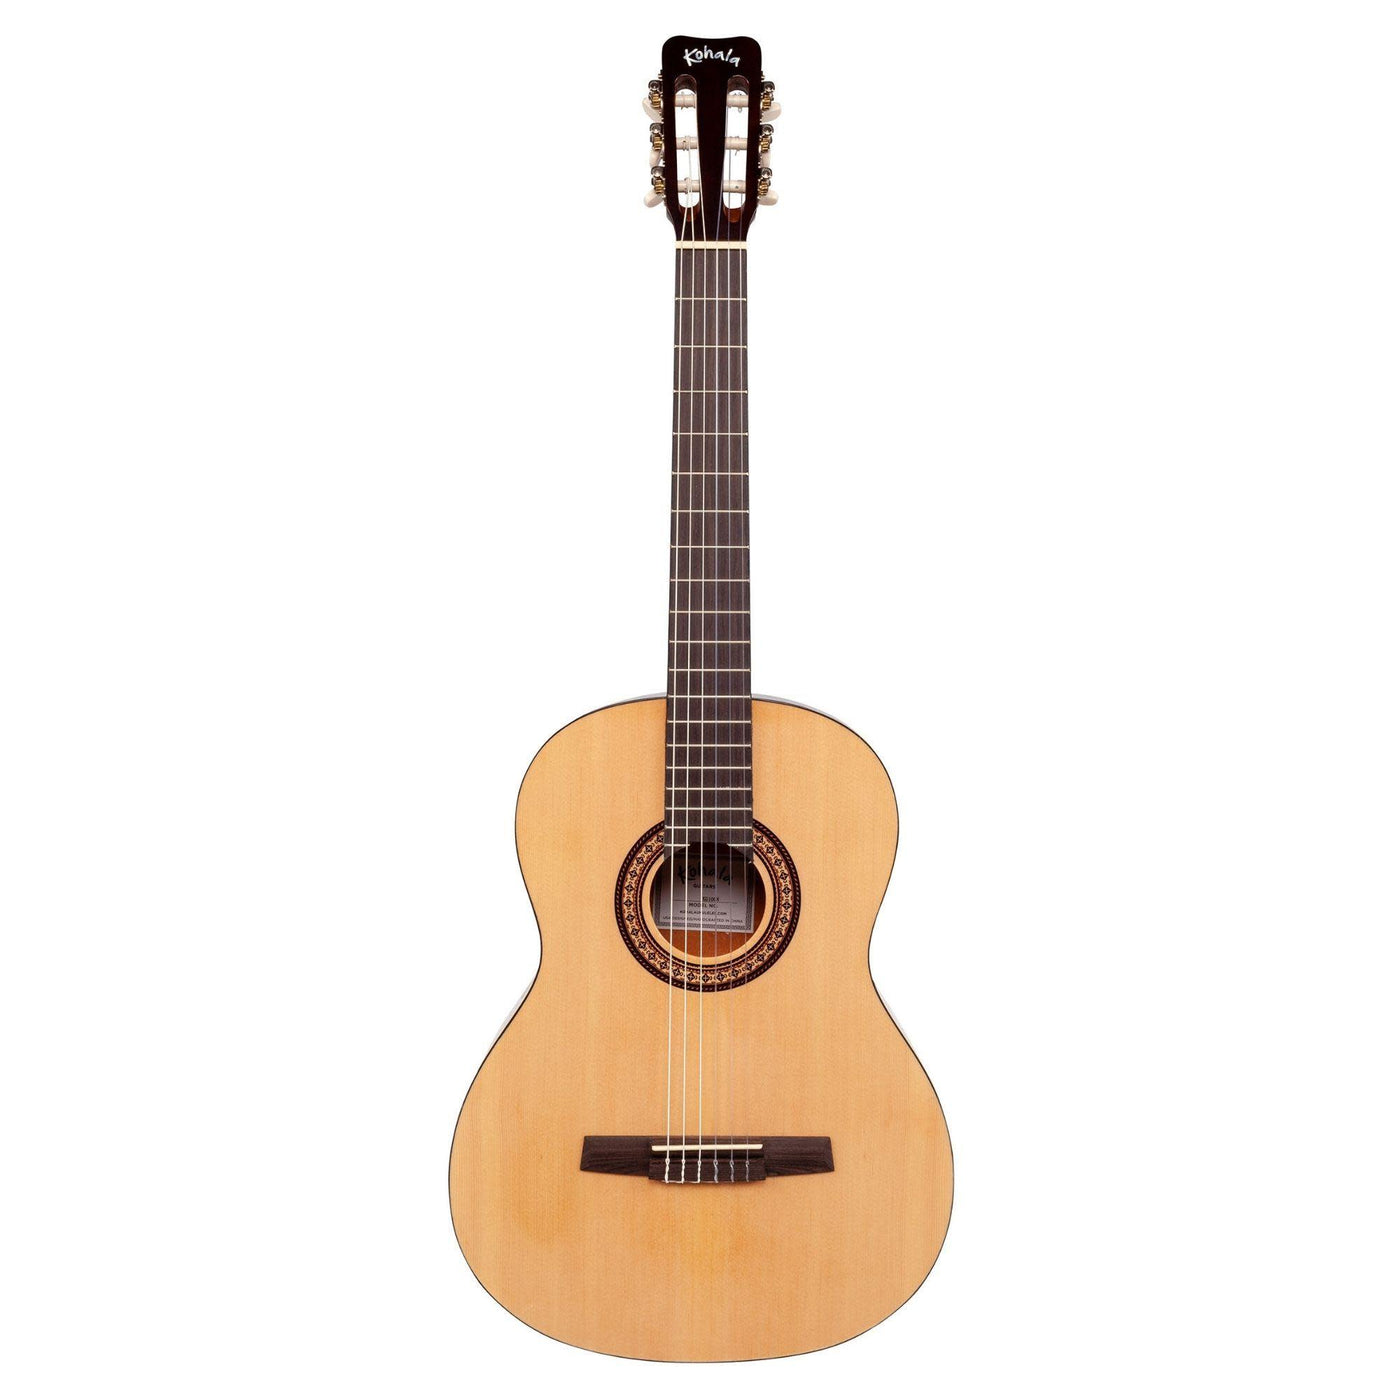 Kohala KG100N Full Size Nylon String Acoustic Guitar with Bag - Natural